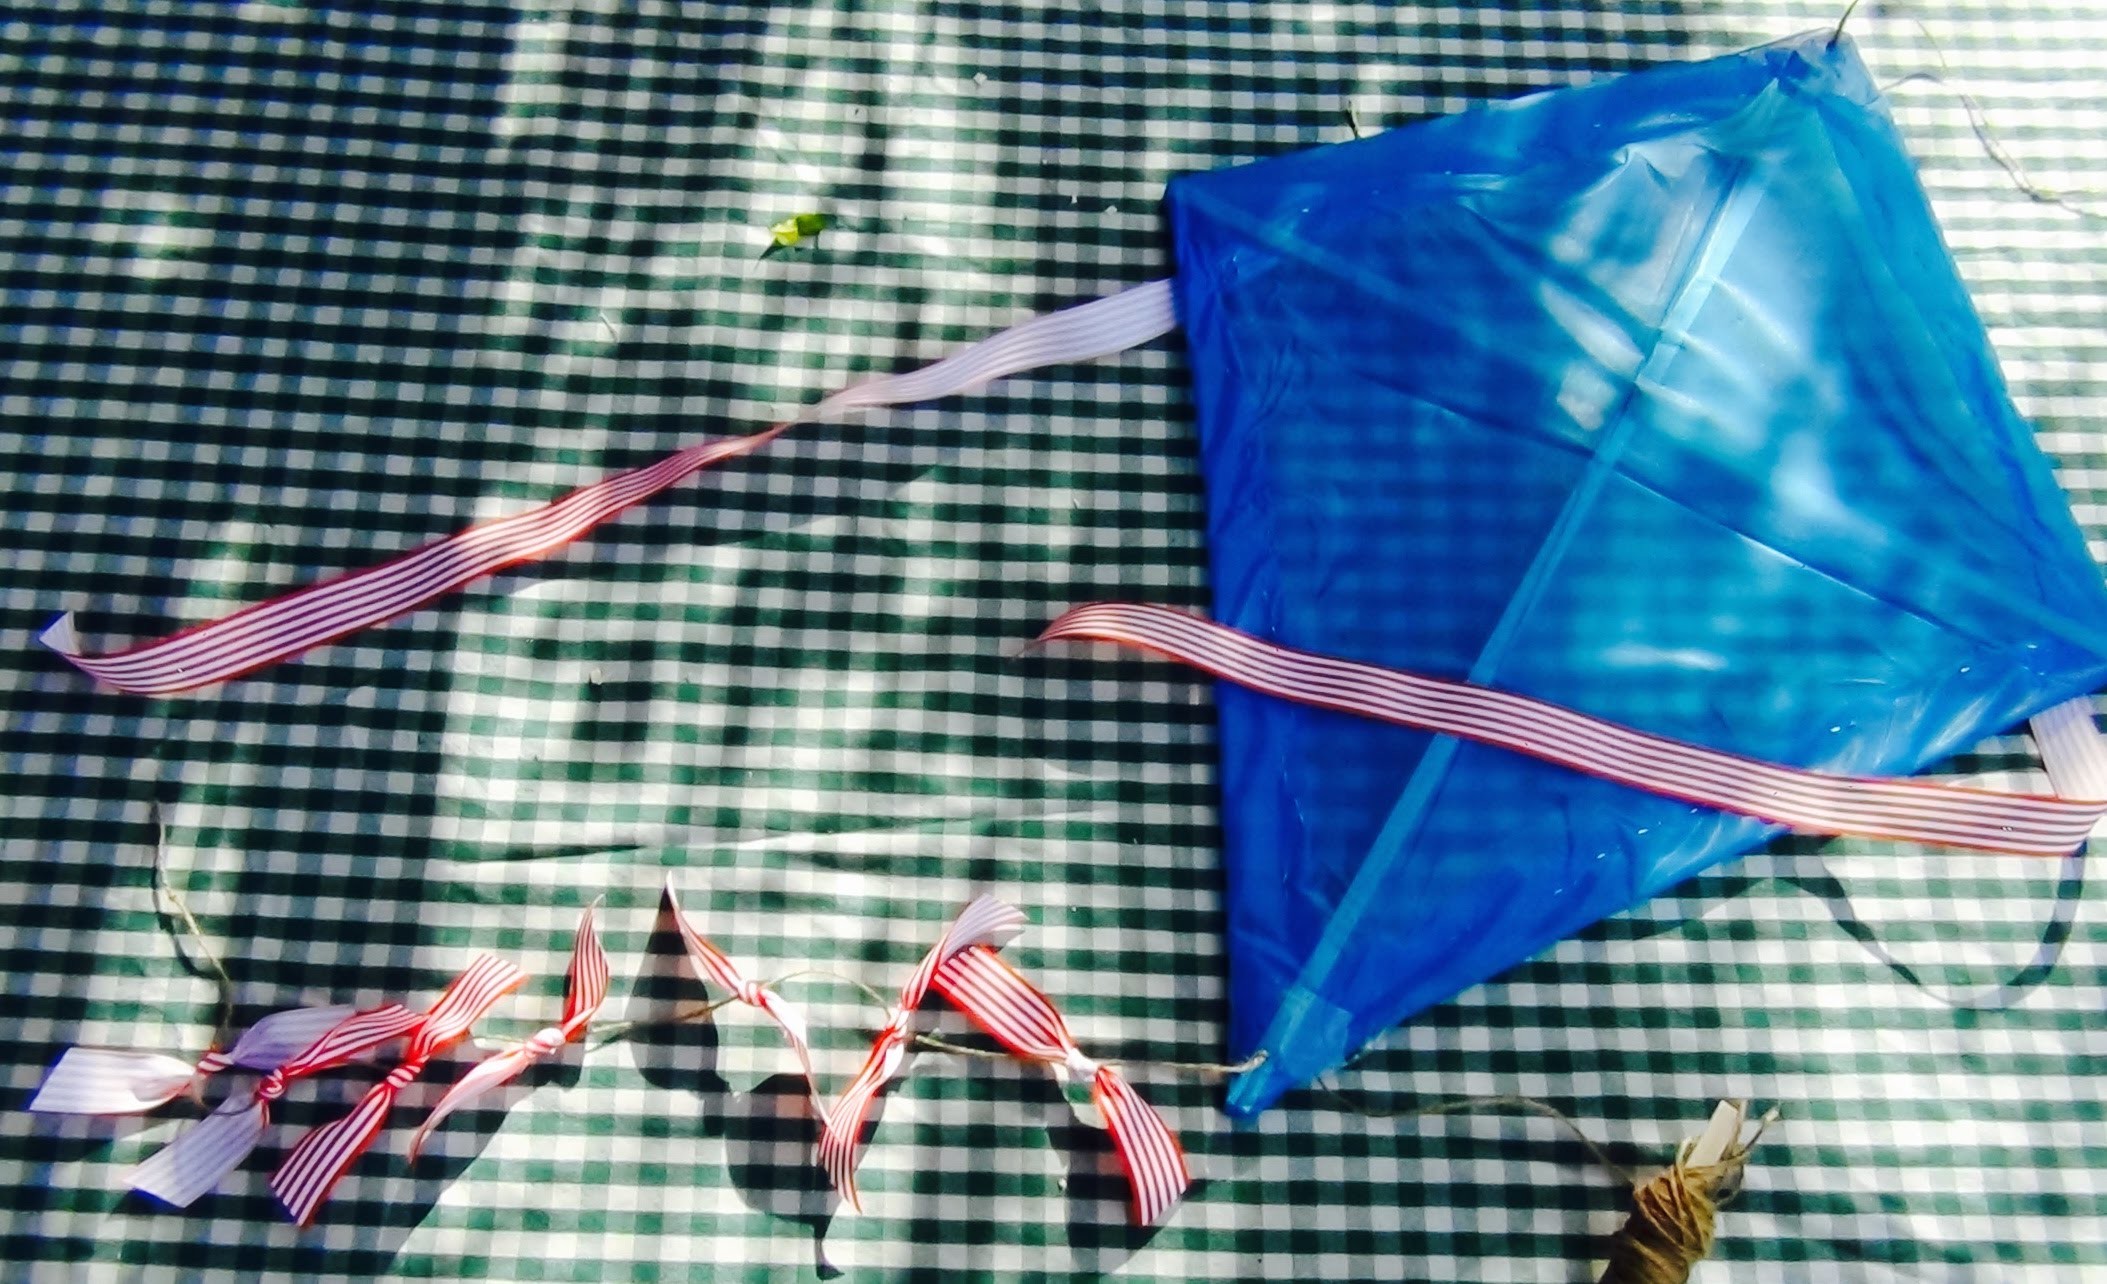 Kite flying: How to make a homemade kite